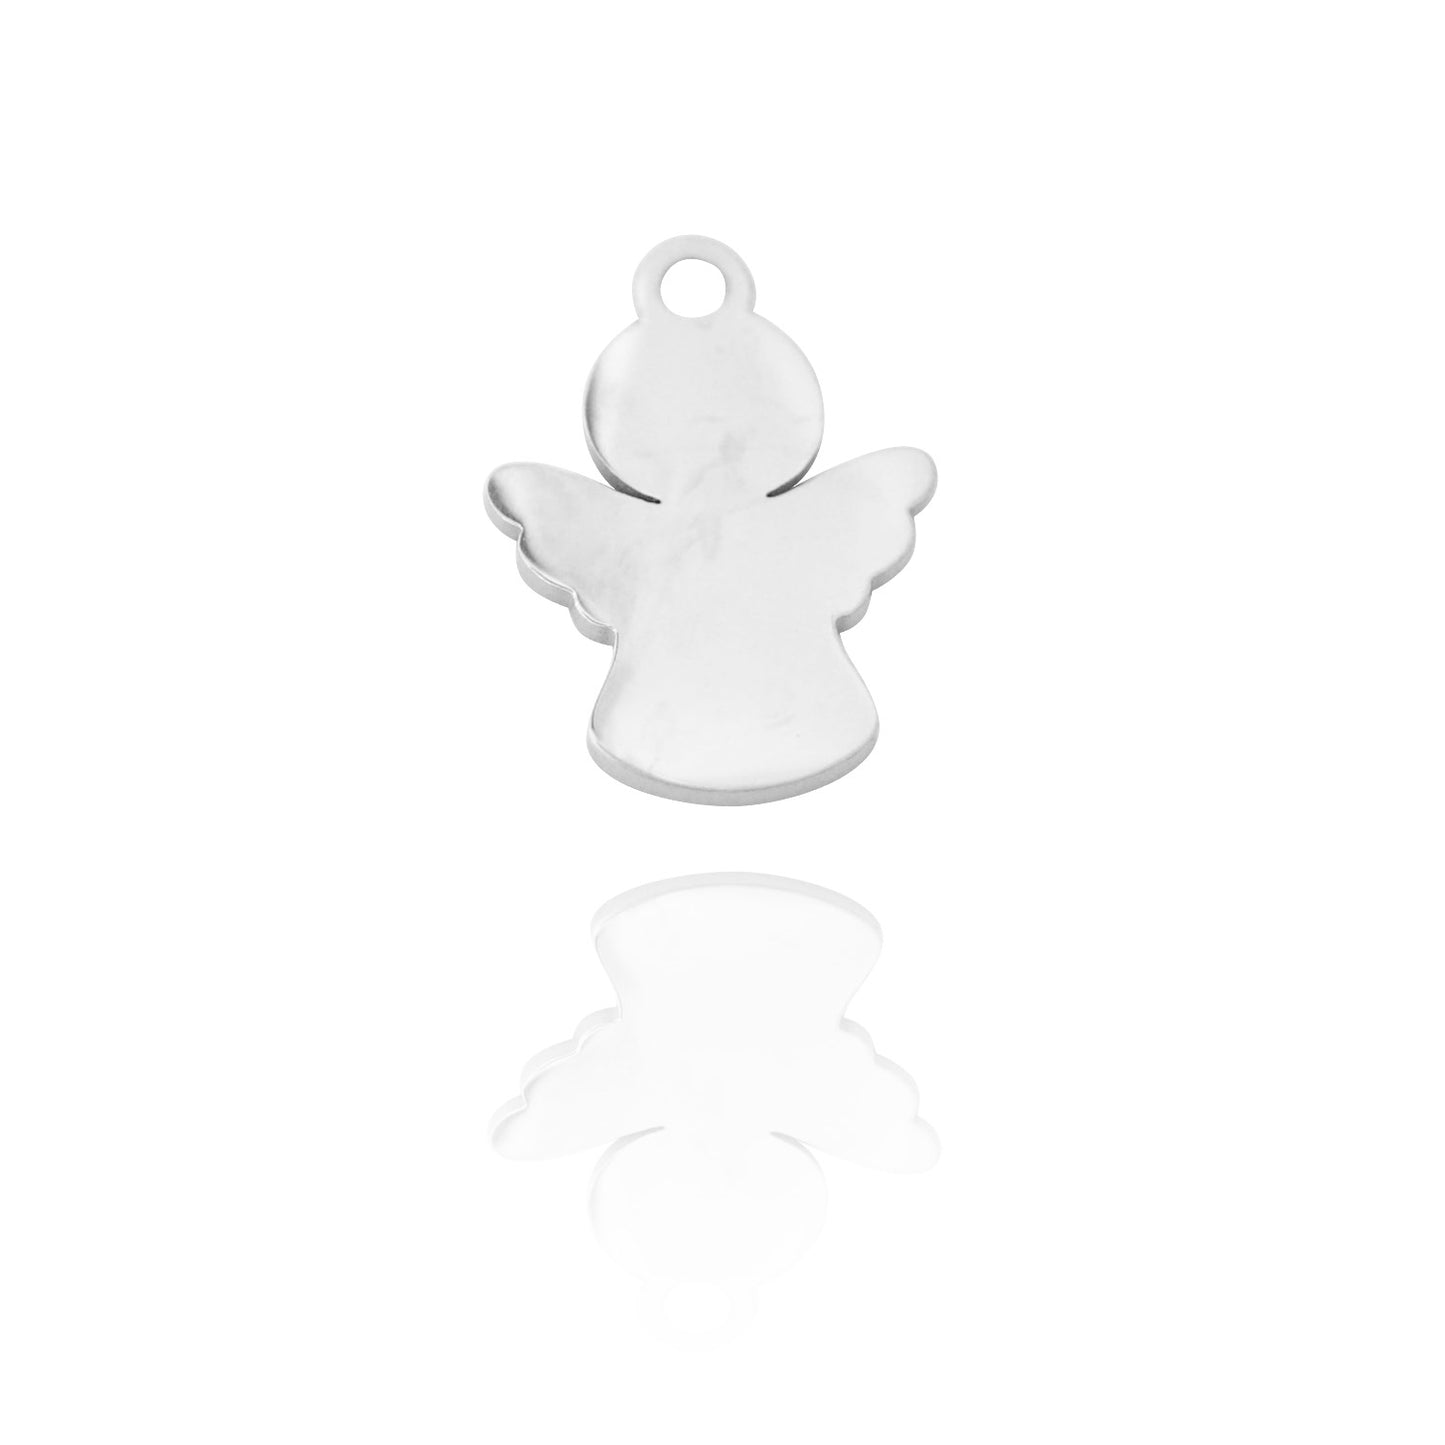 Stainless steel pendant / guardian angel / 13 mm